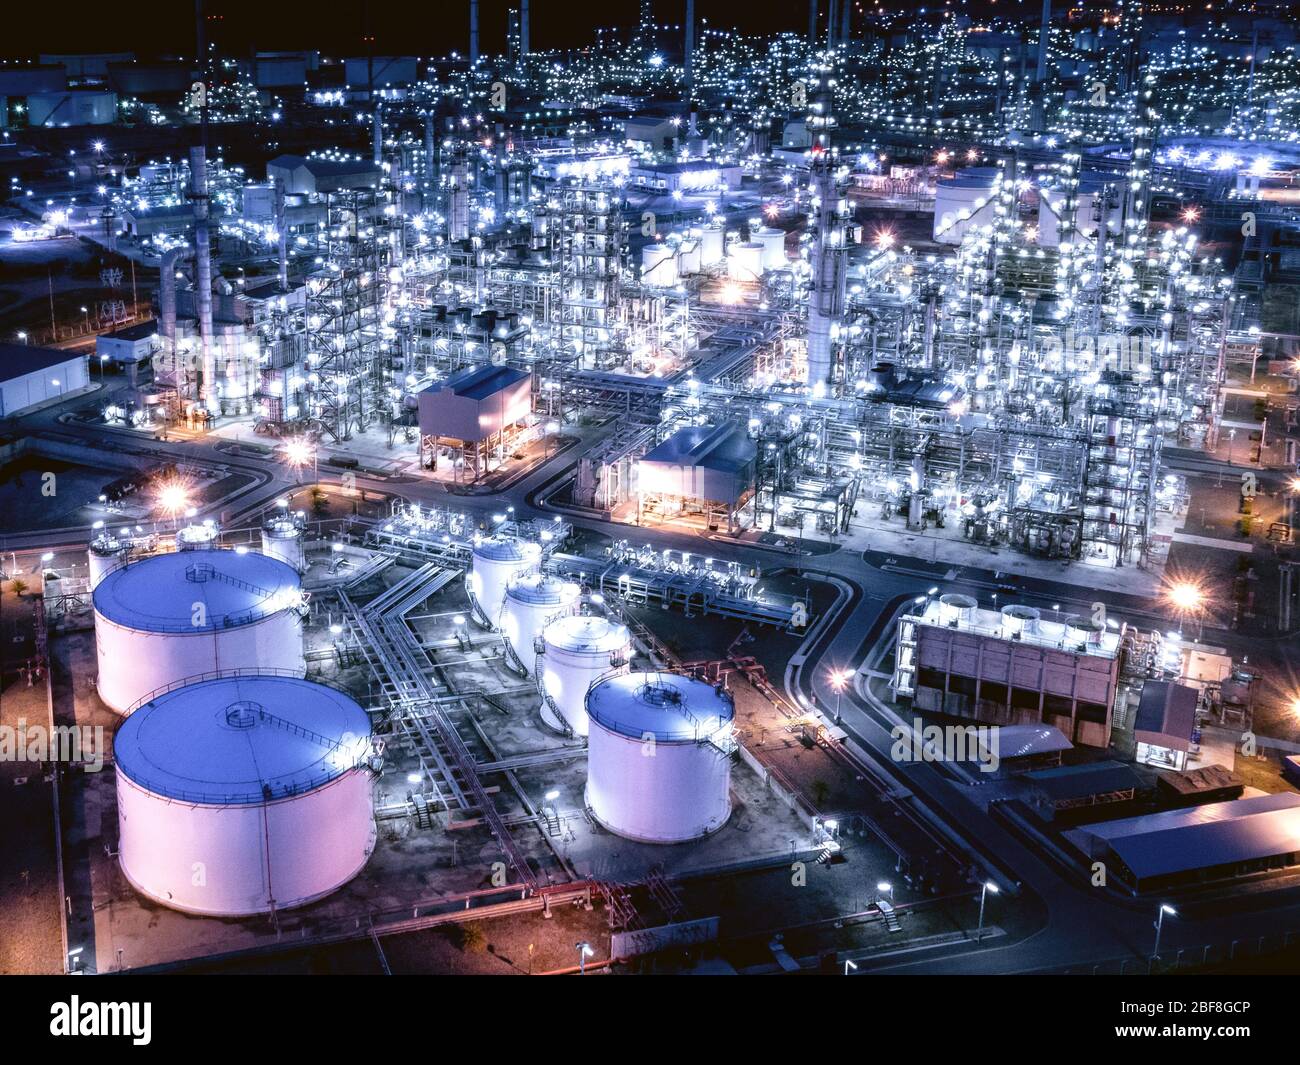 Grandi aziende di raffinazione petrolifera. Industria di raffinazione del combustibile di notte Foto Stock